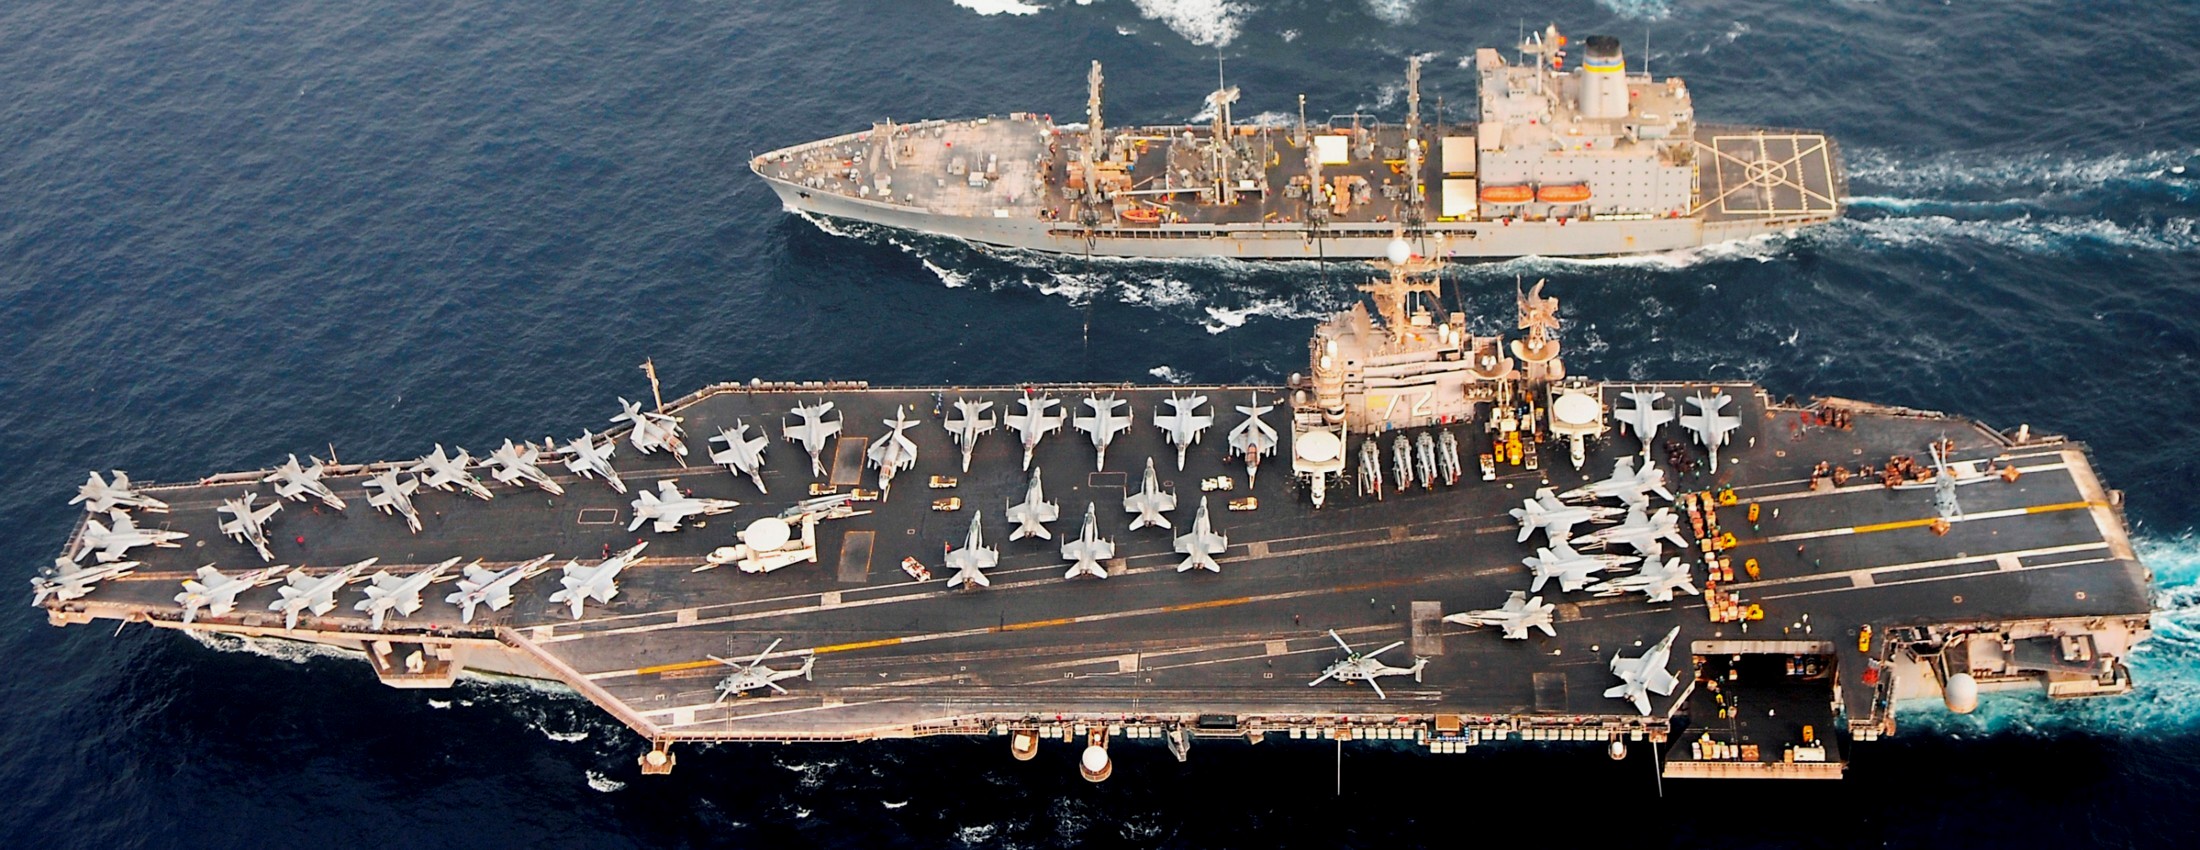 cvn-72 uss abraham lincoln nimitz class aircraft carrier air wing cvw-2 us navy arabian sea p13